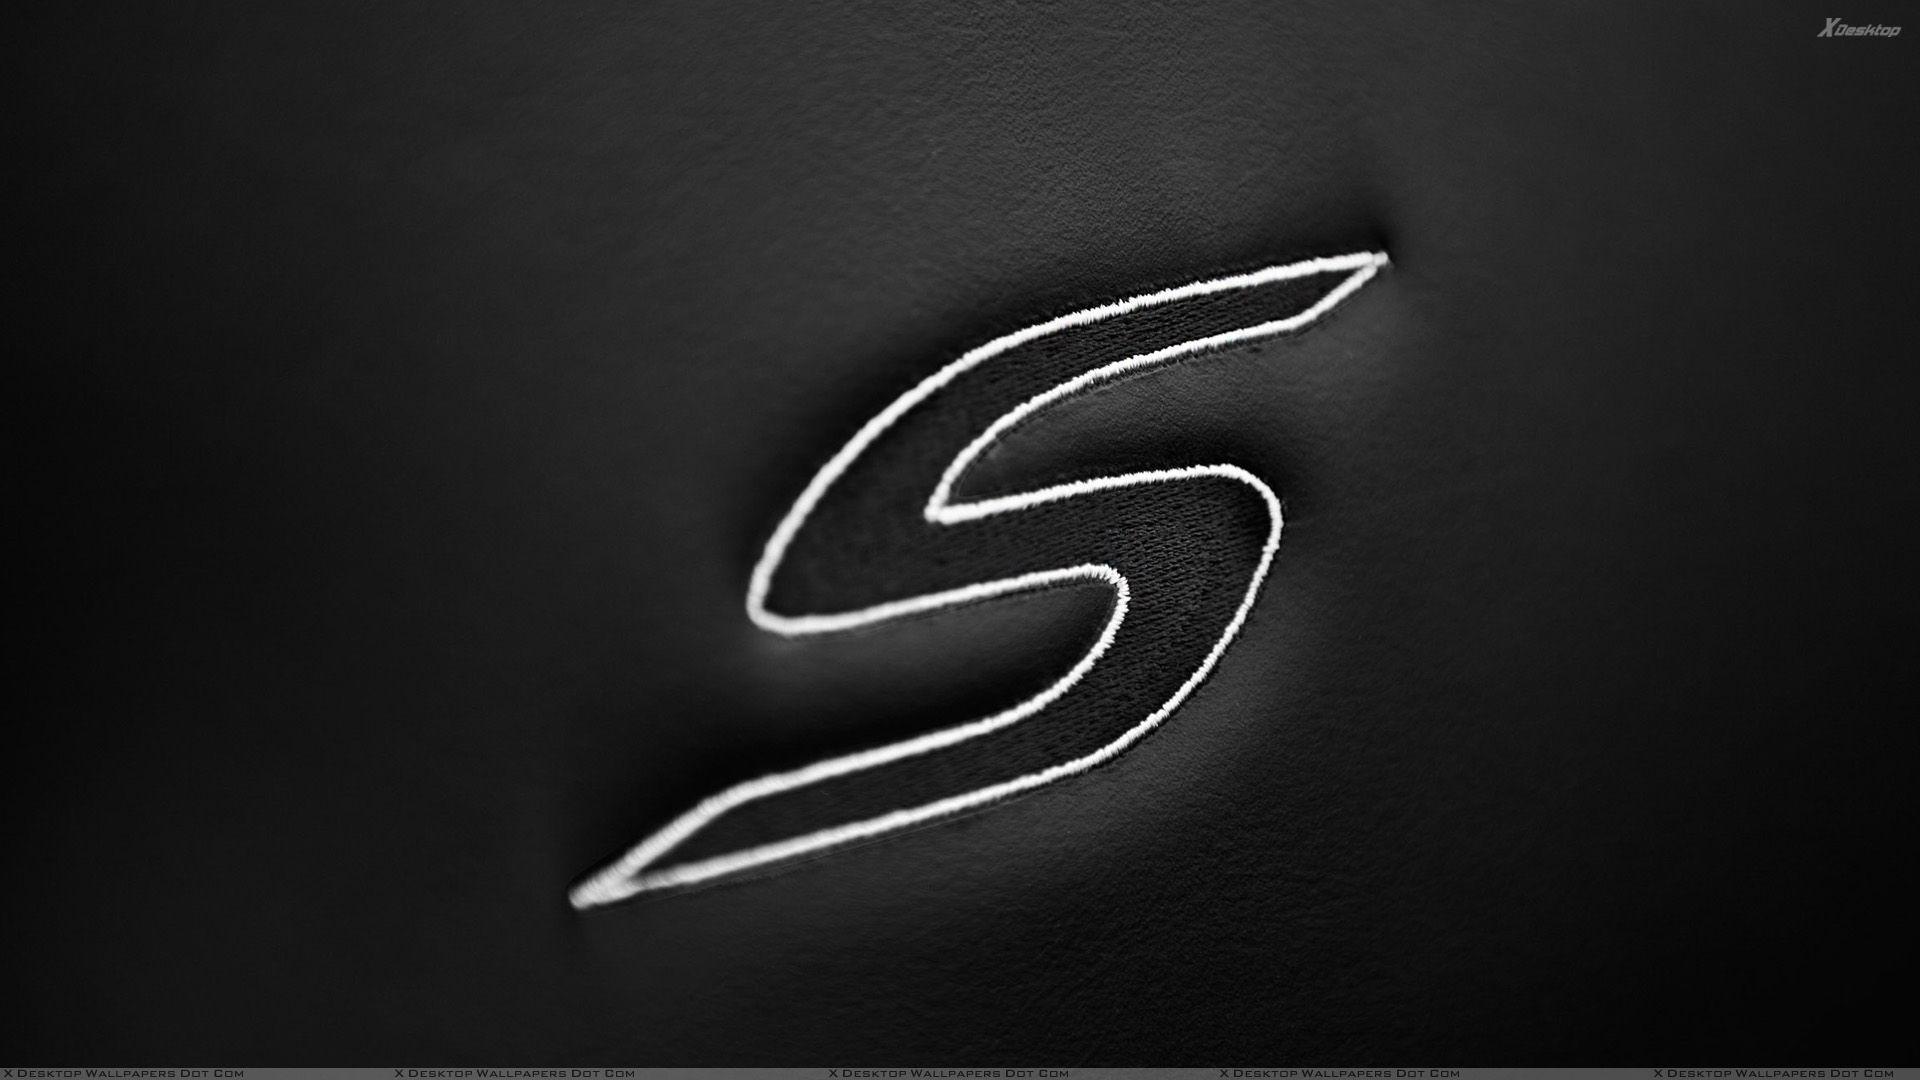 Black and White S Logo - File:Chrysler S LoGo And Black Background.jpg - Wikimedia Commons